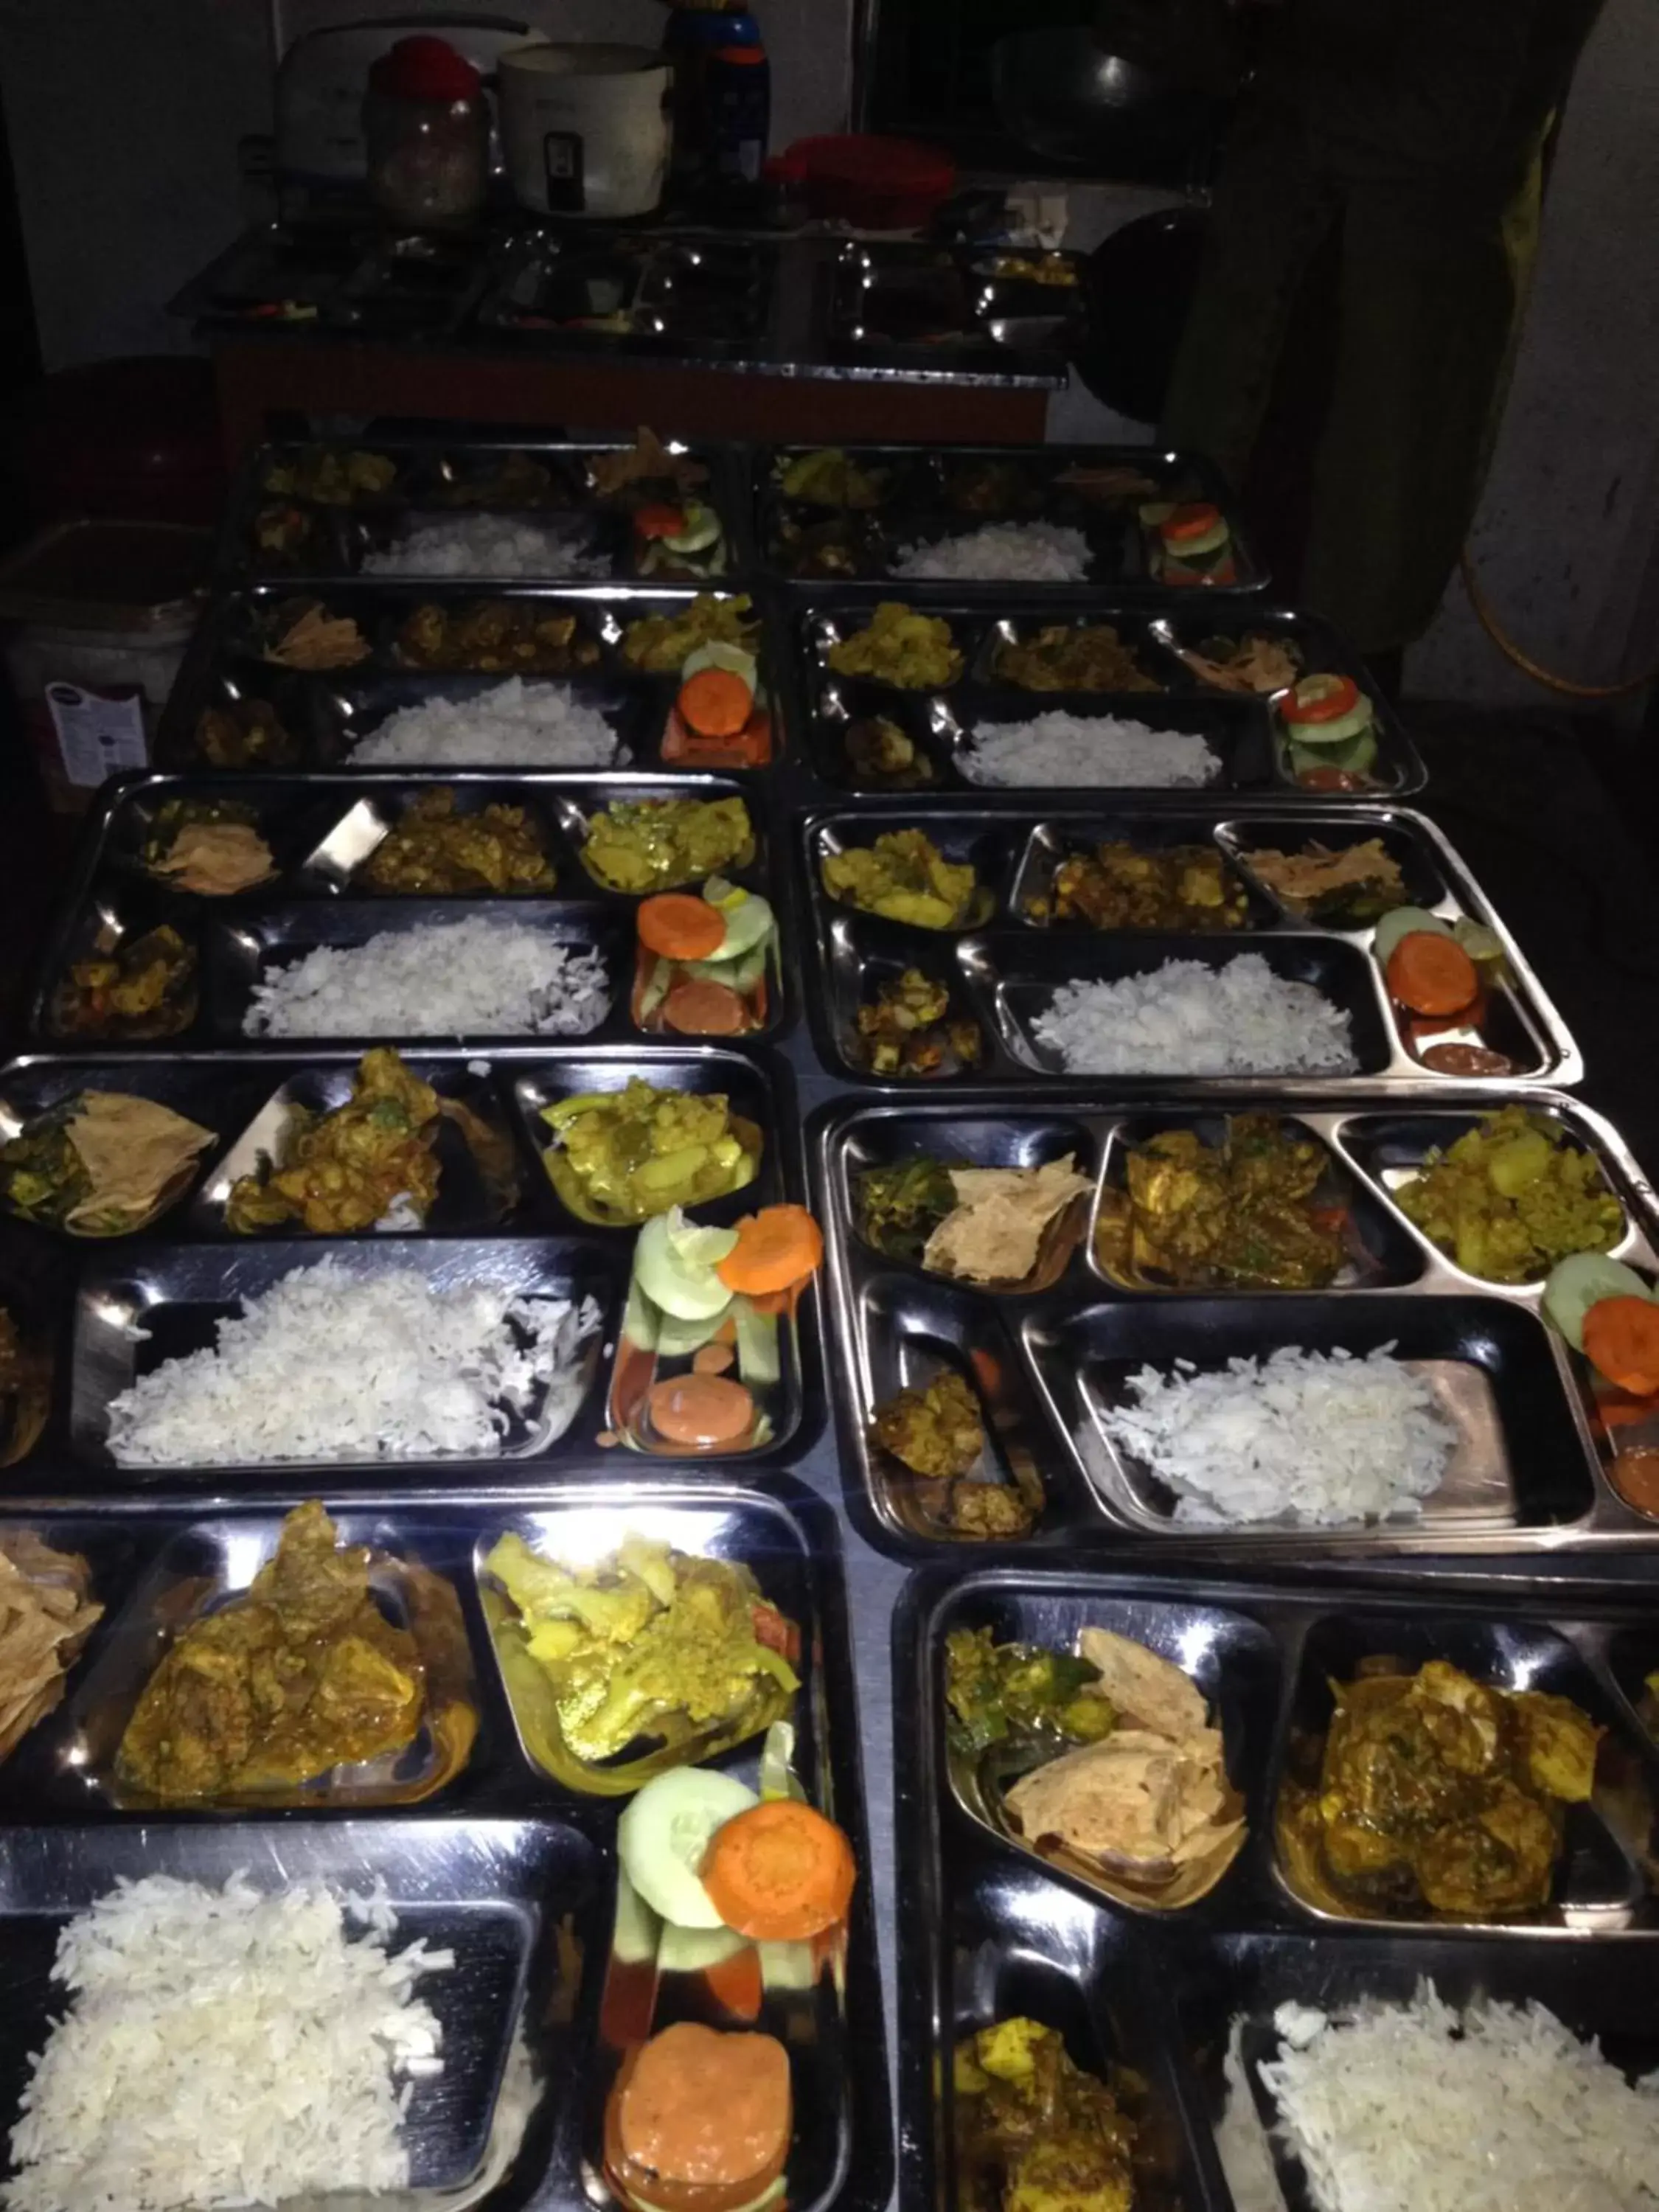 Meals, Food in New Pokhara Lodge - Lakeside, Pokhara Nepal